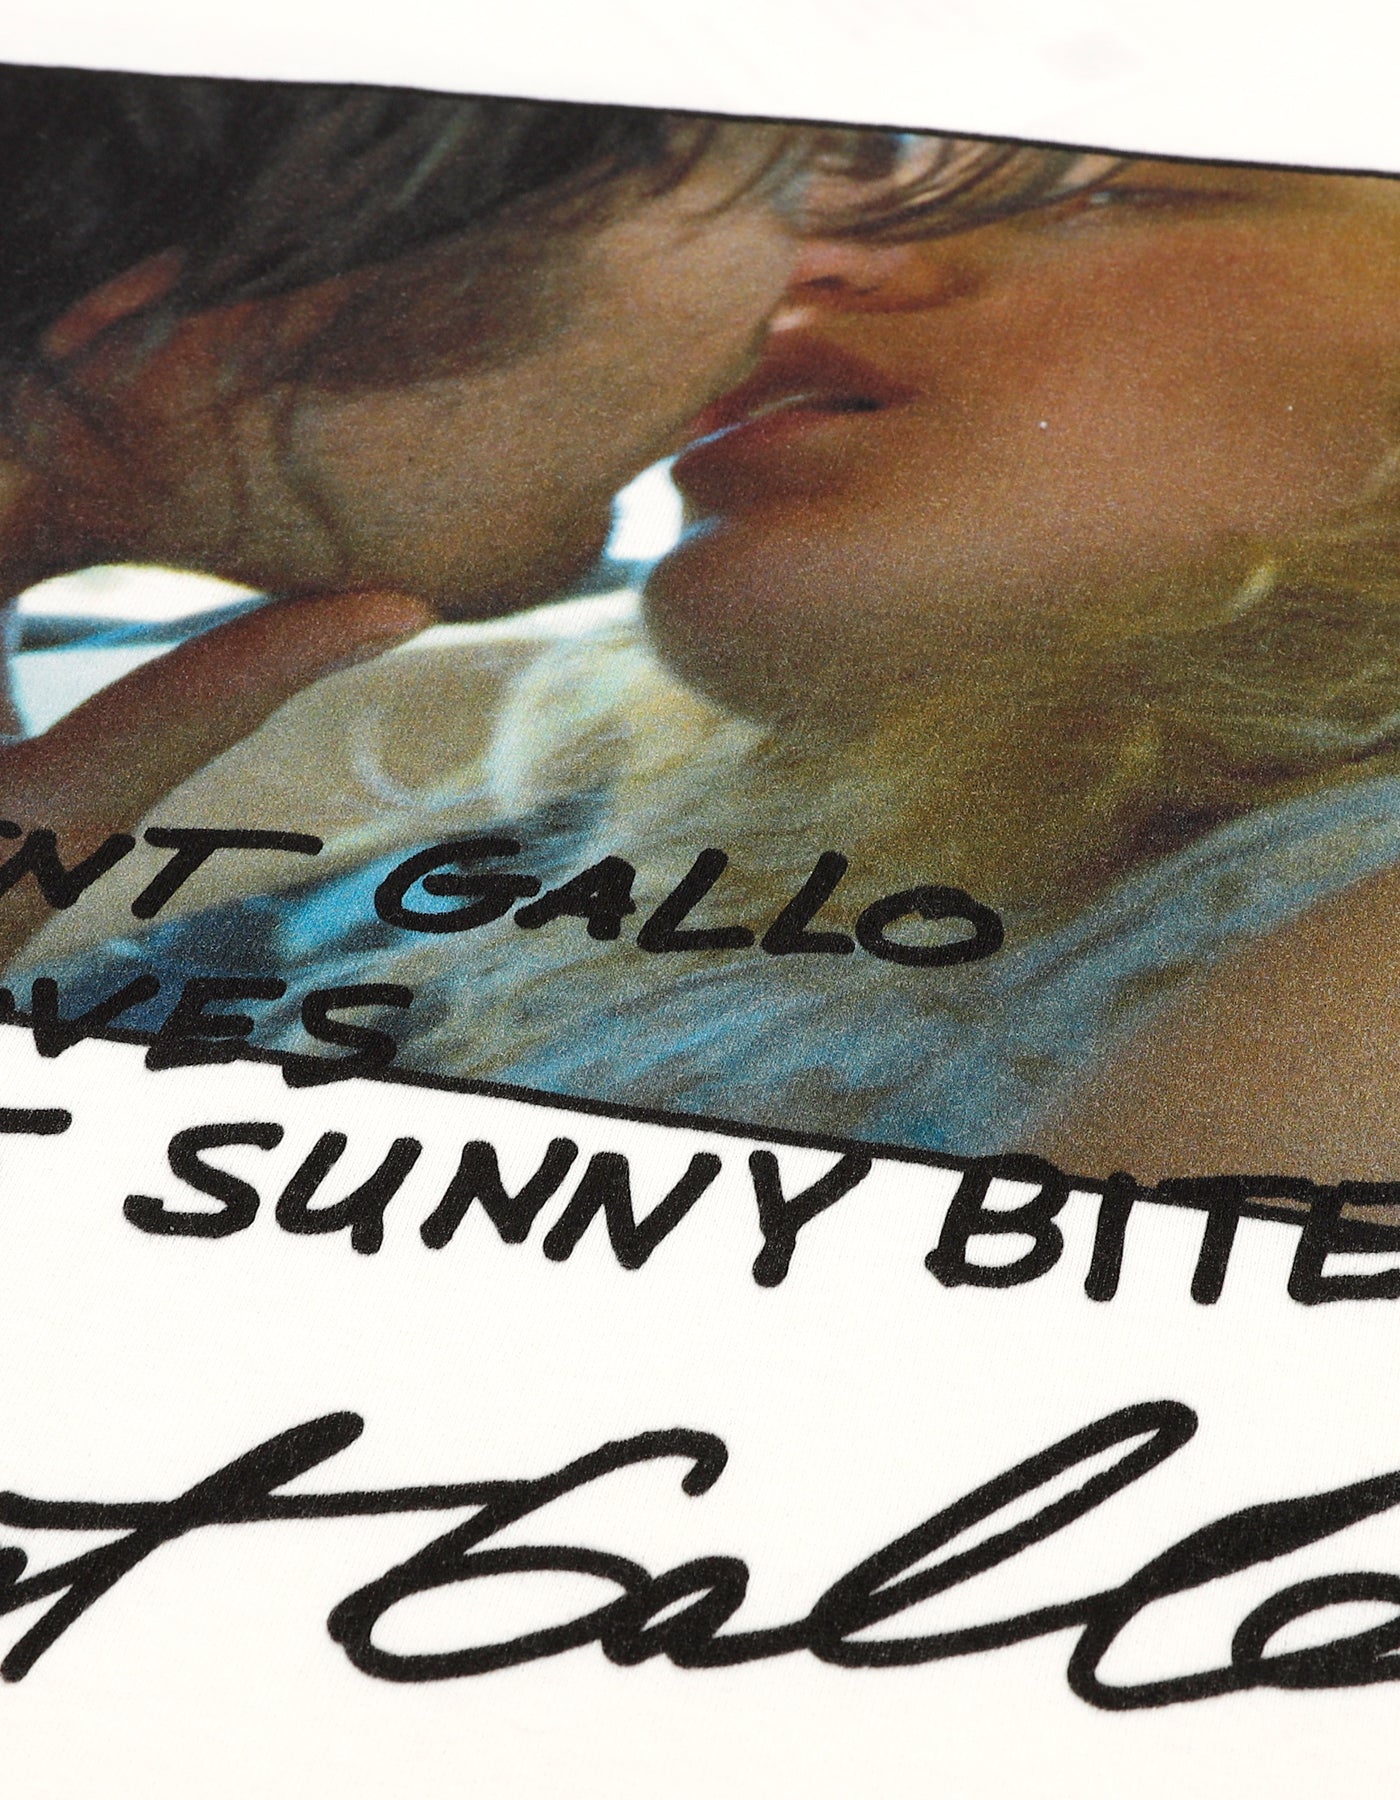 Vincent Gallo x little sunny bite photo long tee / WHITE